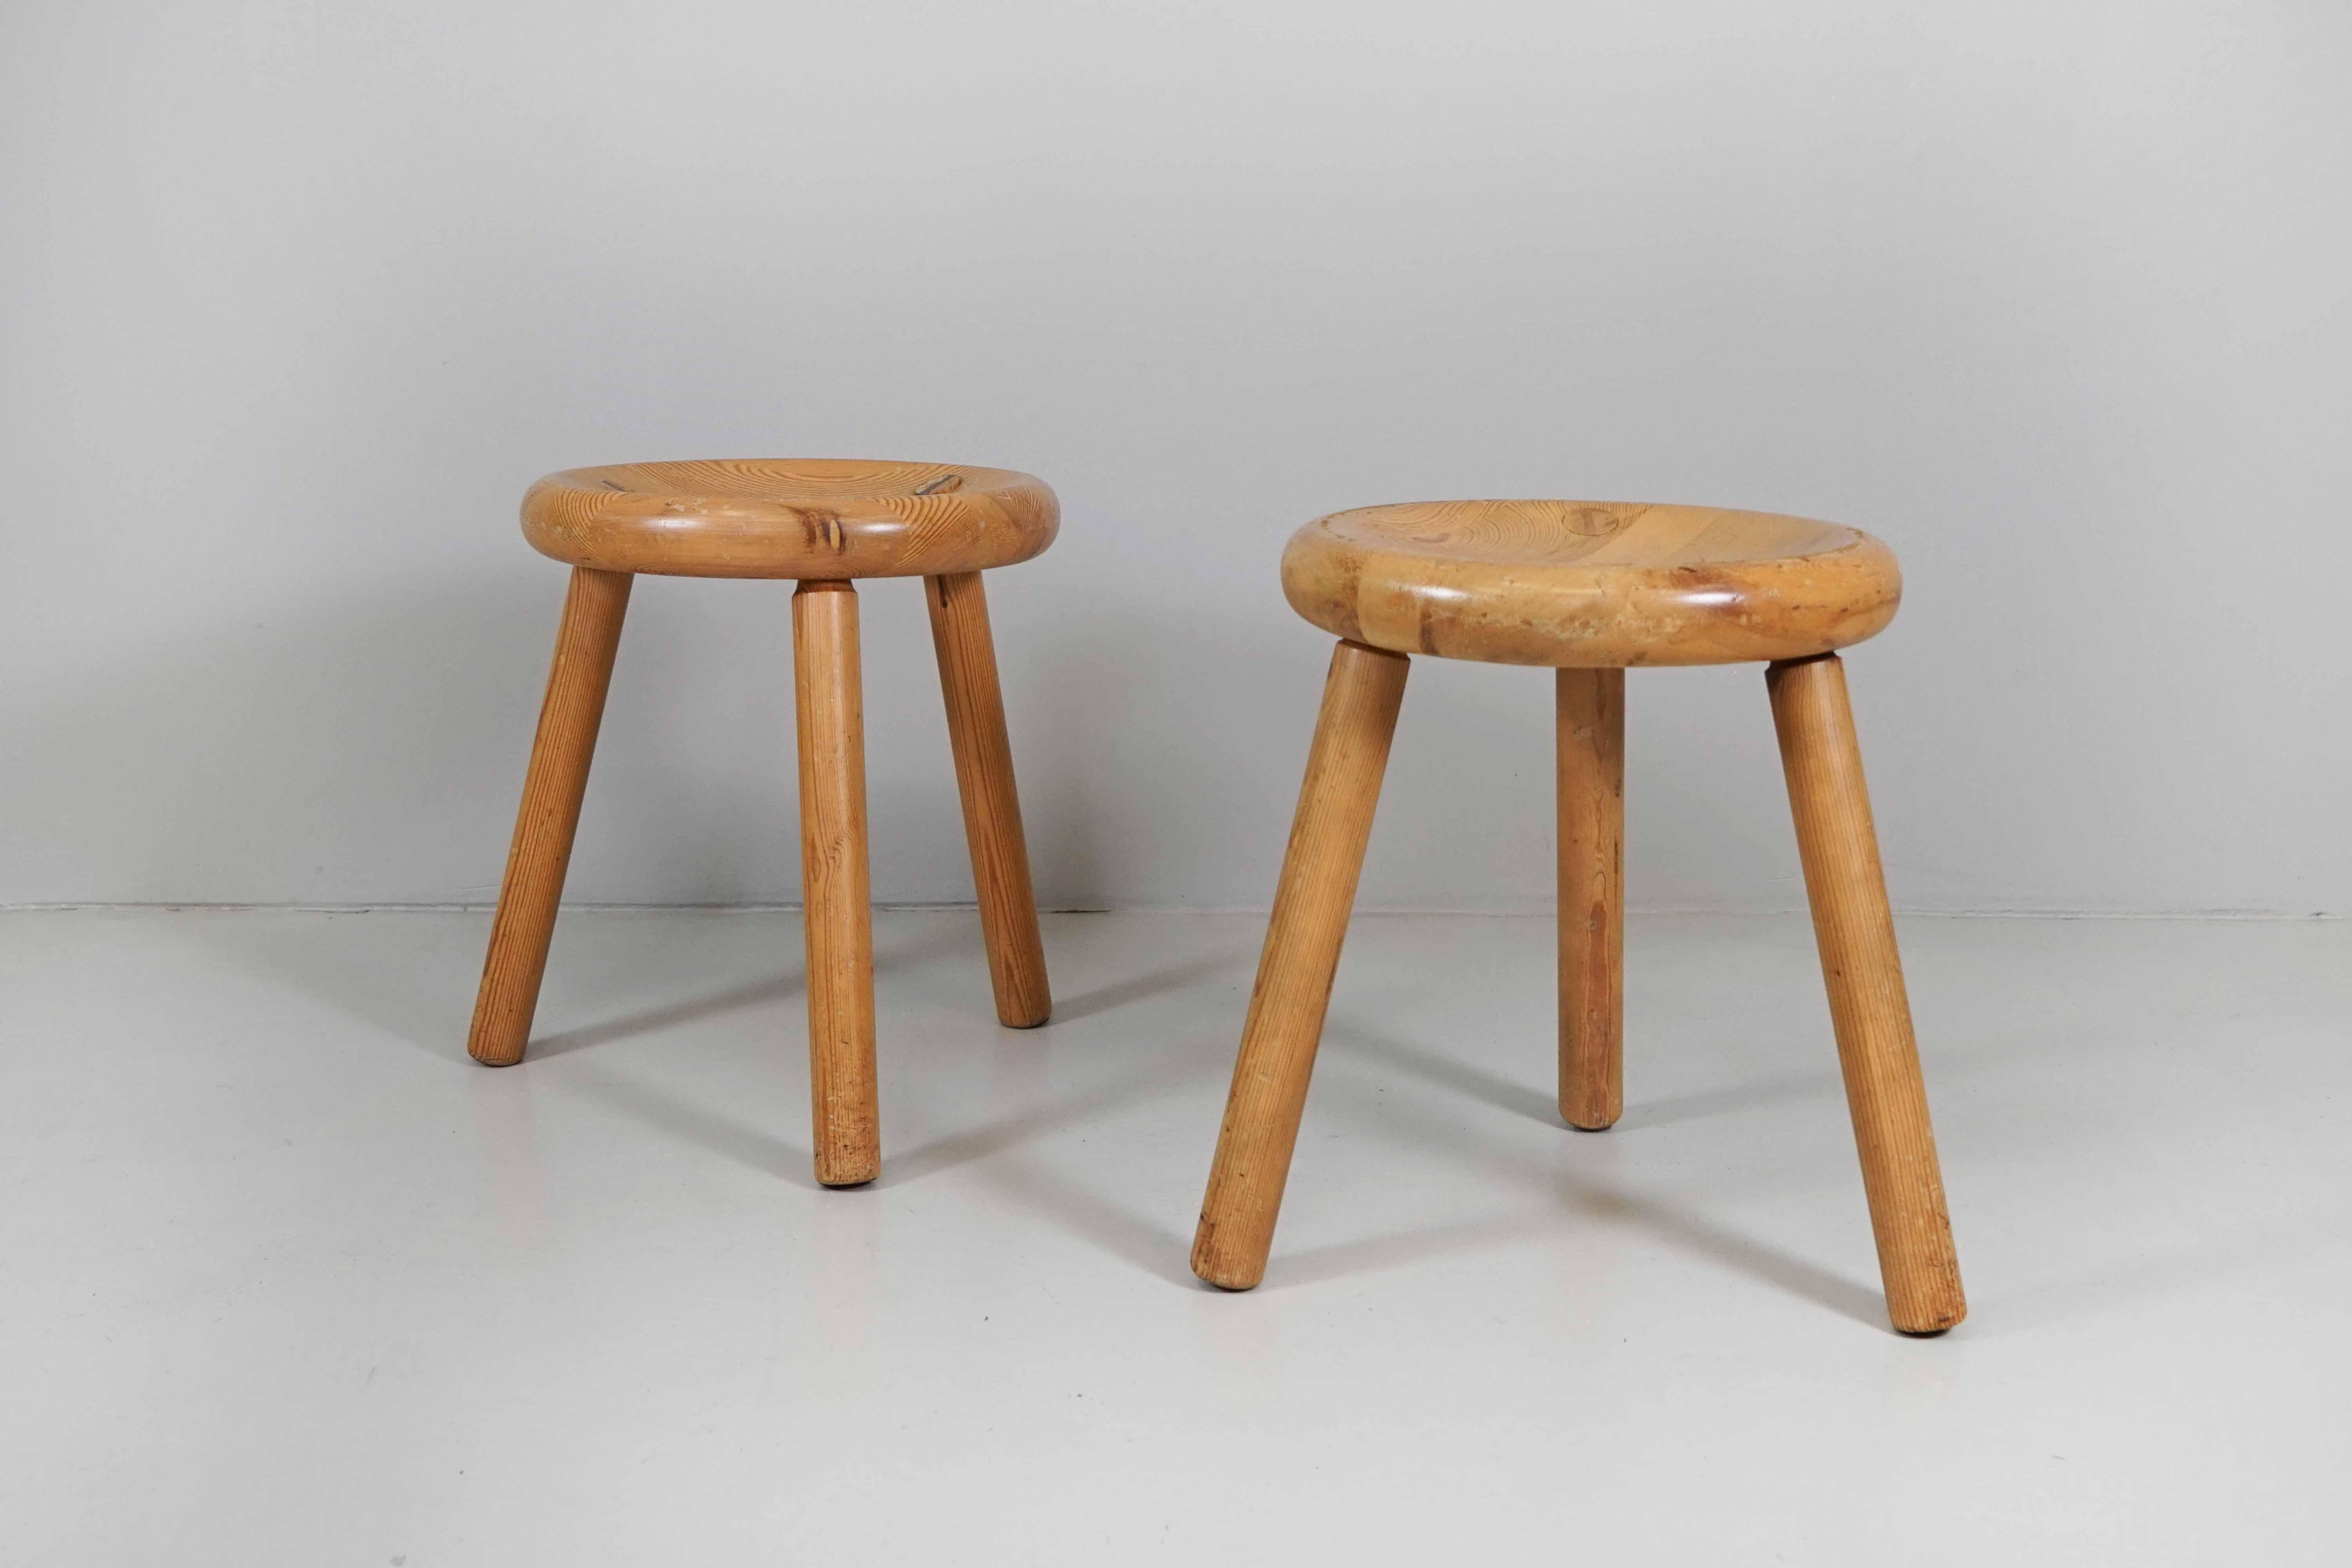 Two beautiful and Classic modern stools, made of solid pine wood. Designed by Bertel Gardberg
Manufacturer / Noomarkkun Käsityöt, Finnland

